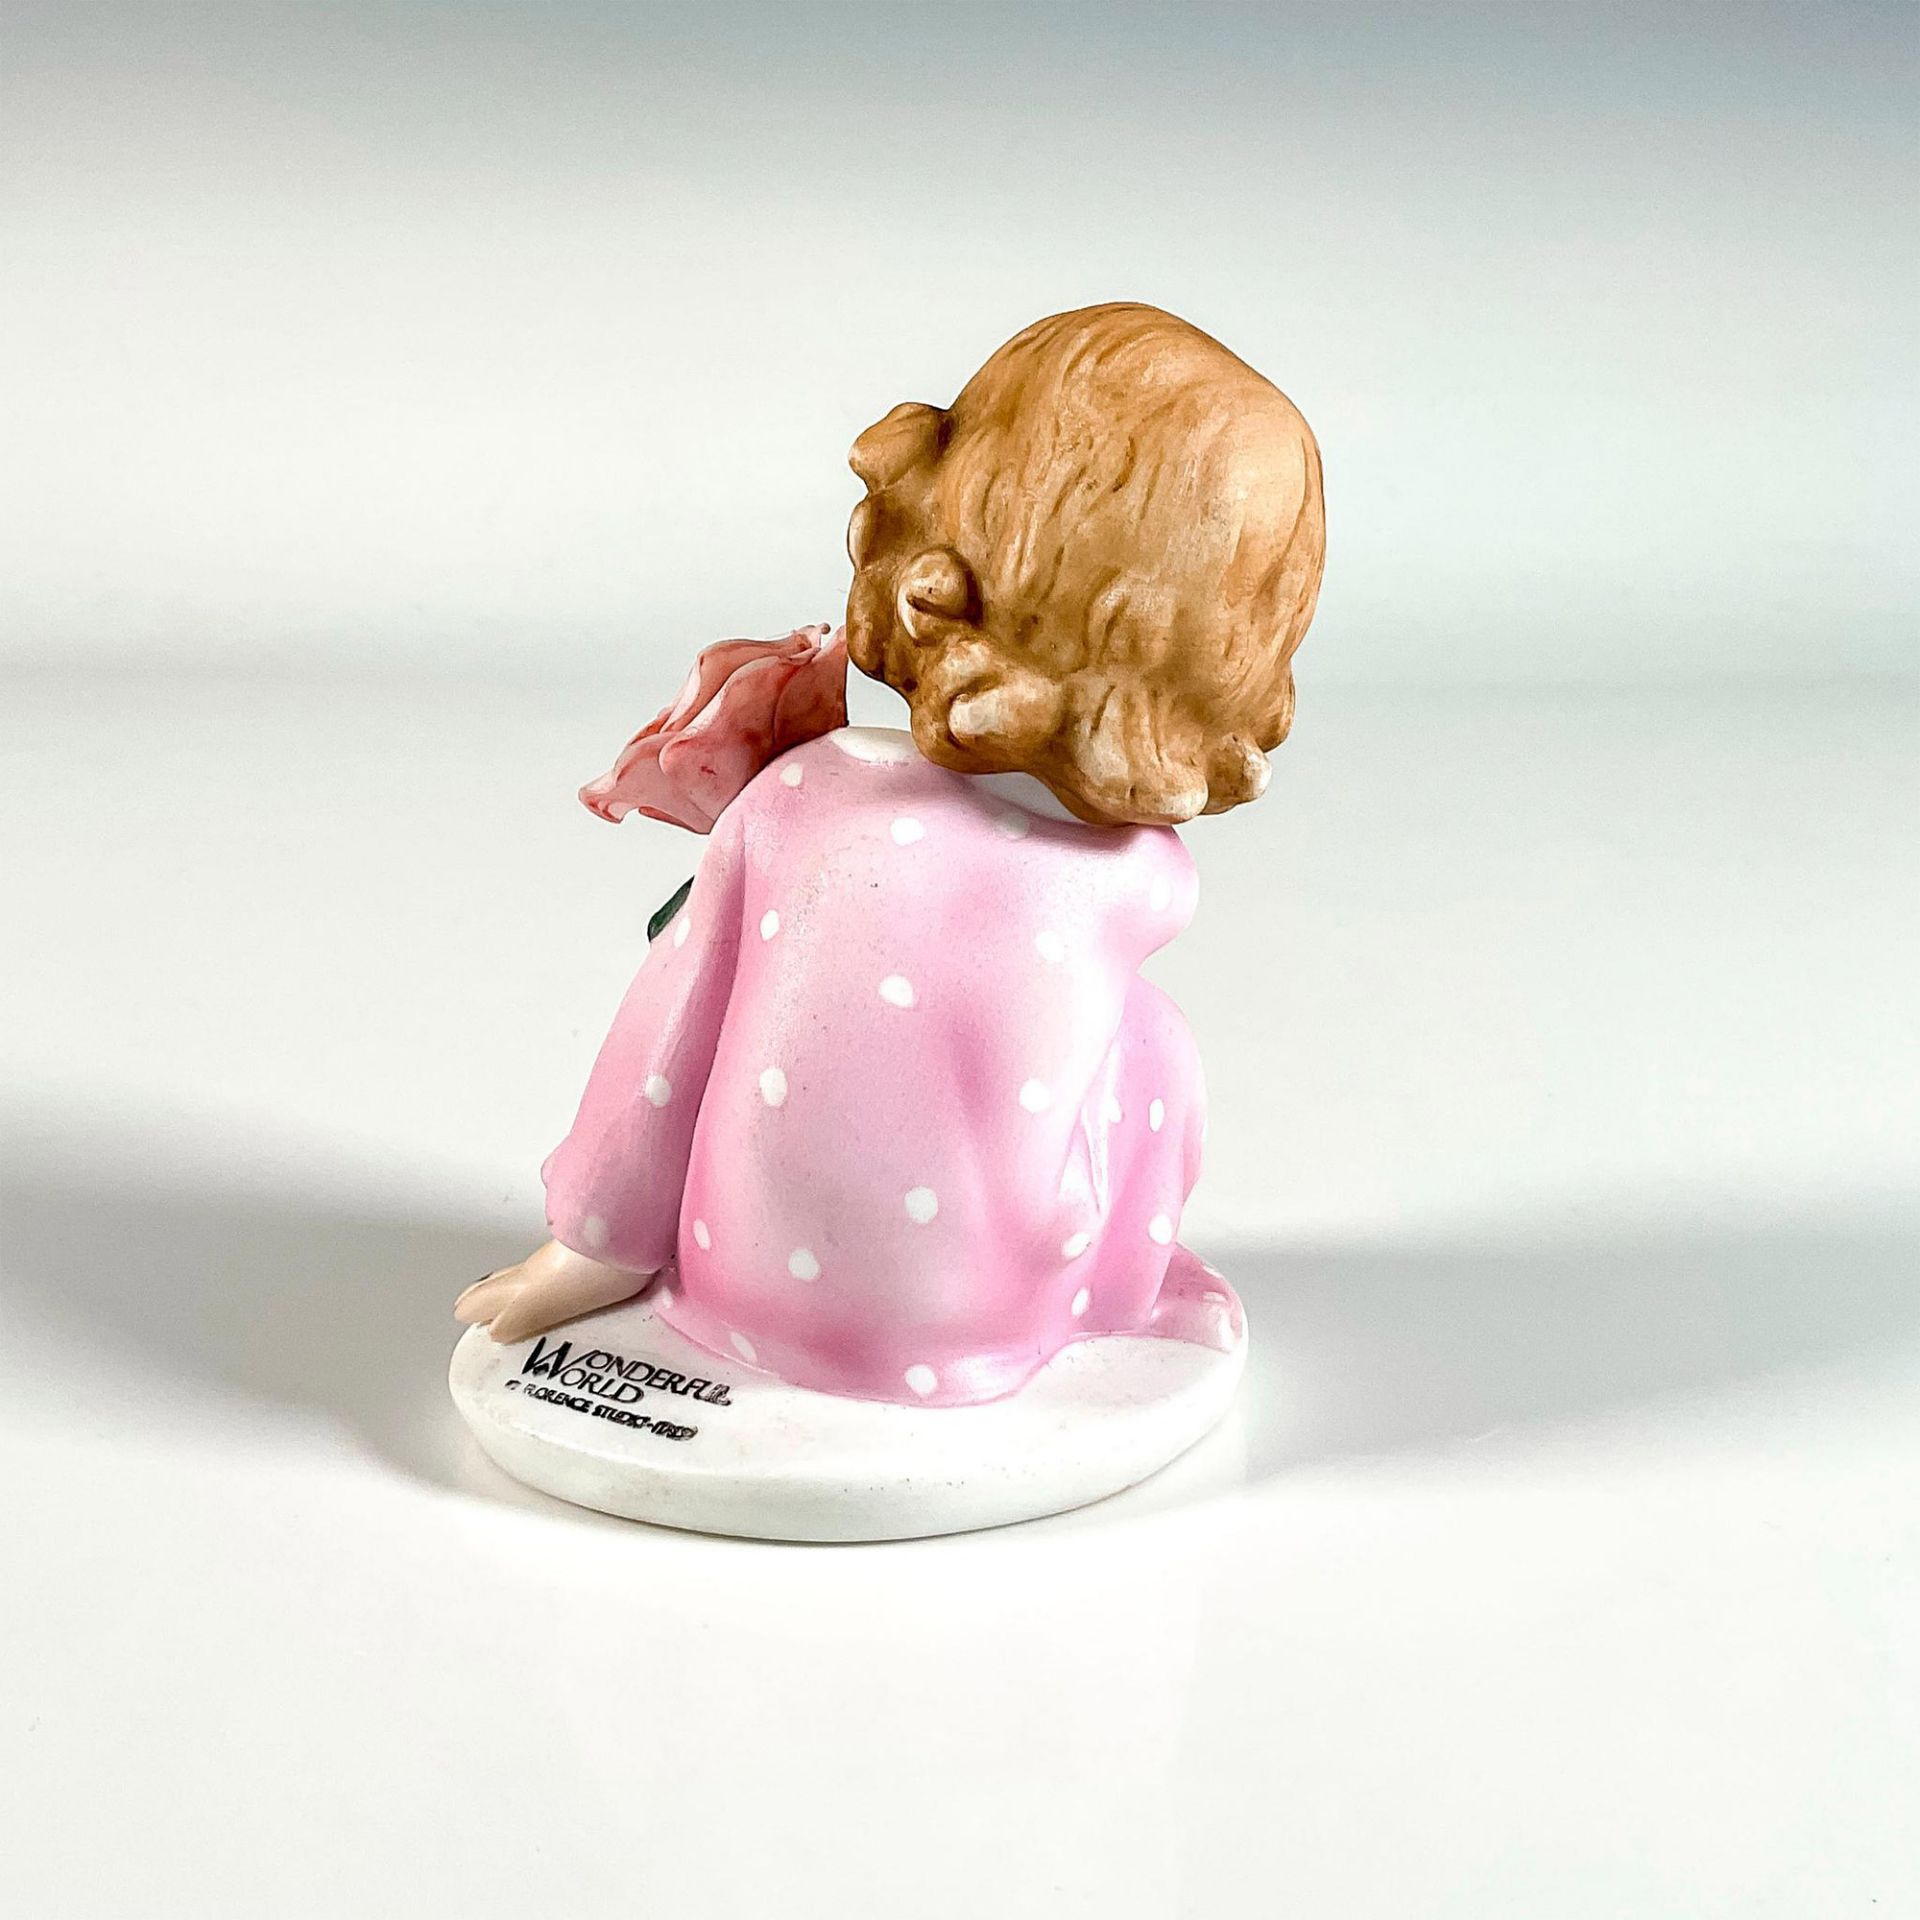 Florence Giuseppe Armani Figurine, Sitting Girl with Rose - Image 2 of 3